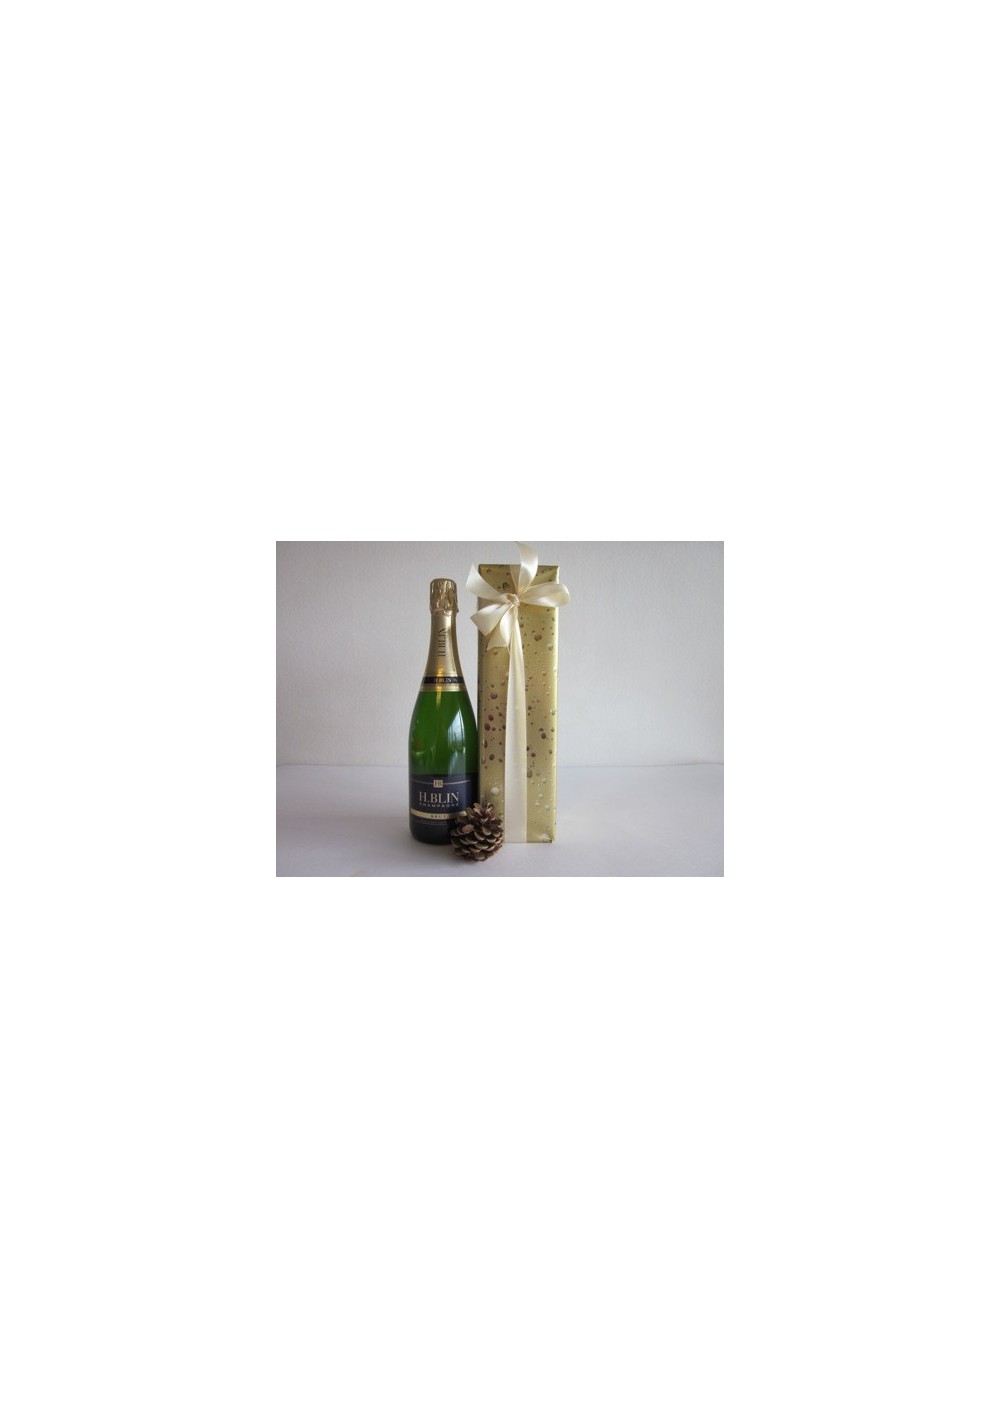 Champagne H. BLIN - Demi-Sec 